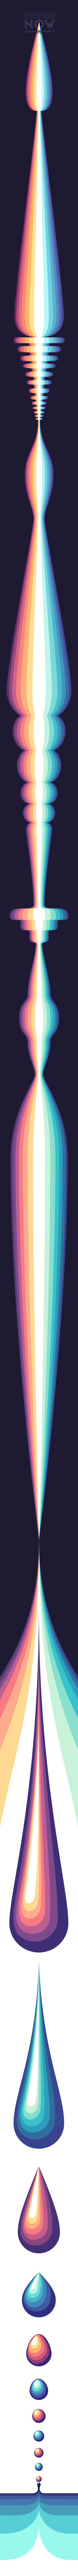 super-long-rainbow-laser-beam-colorgasm-scrolling-image-by-nina-geometrieva